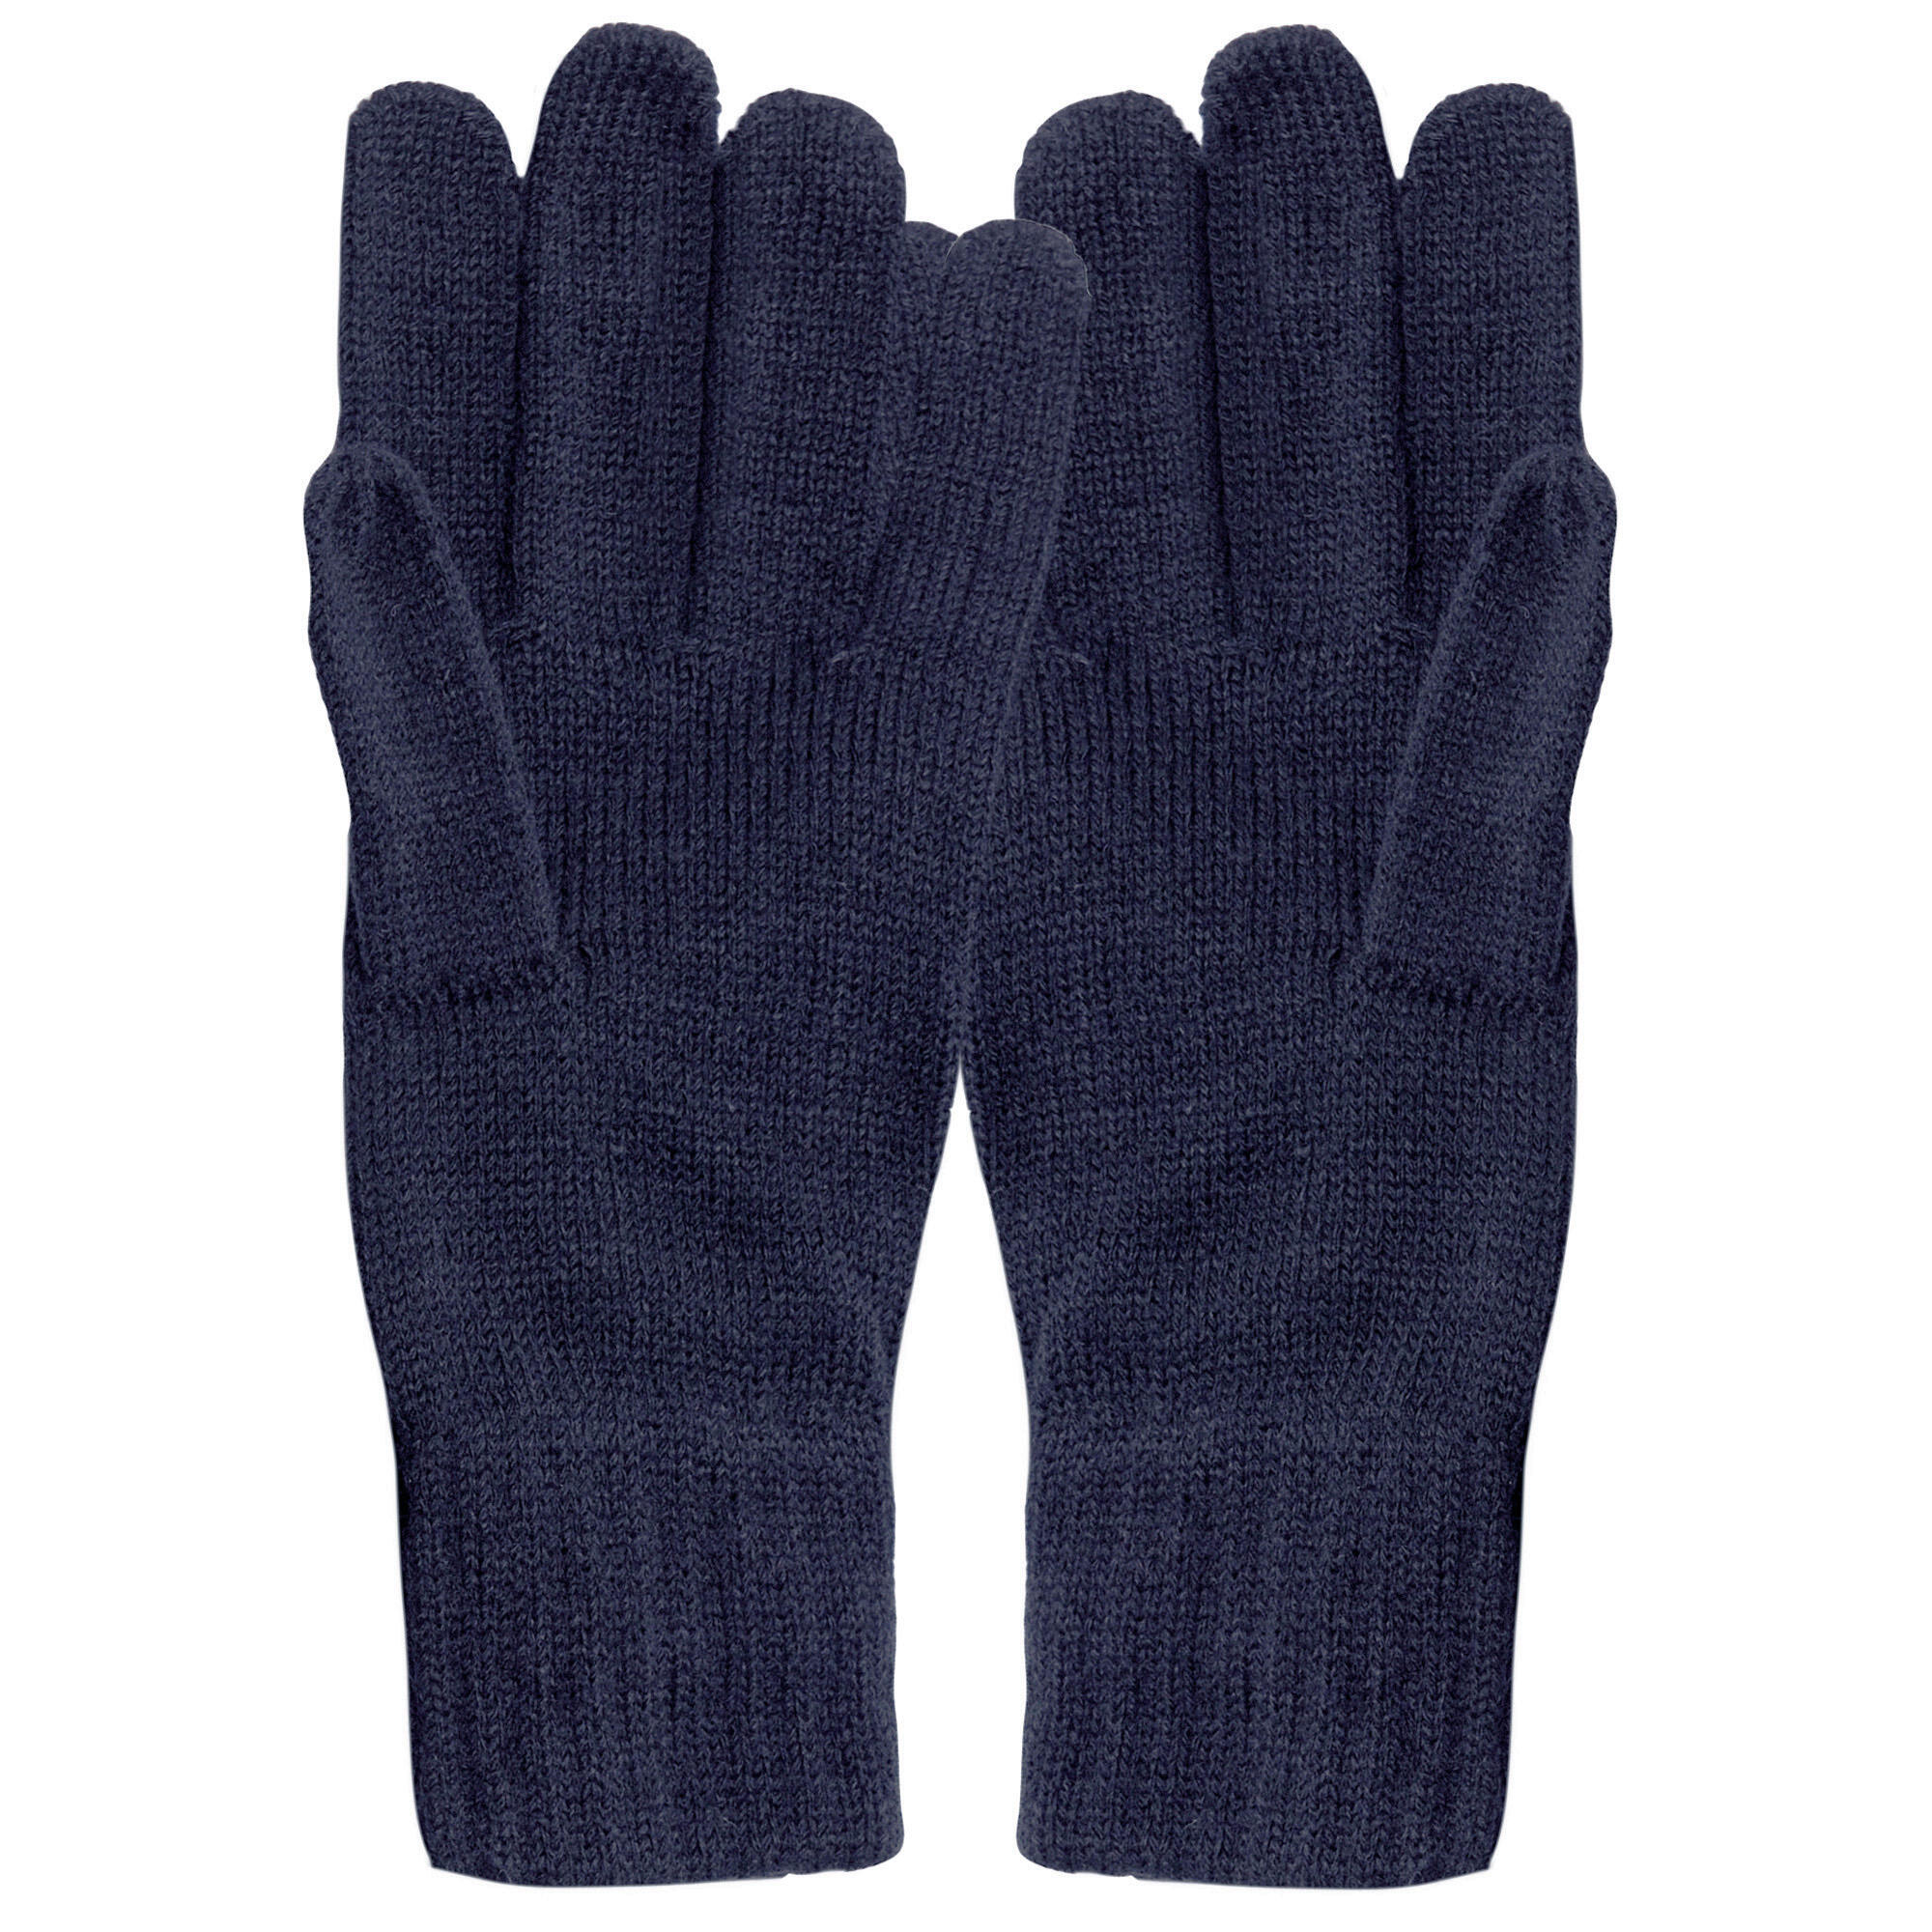 Unisex Knitted Winter Gloves (Navy) 2/5